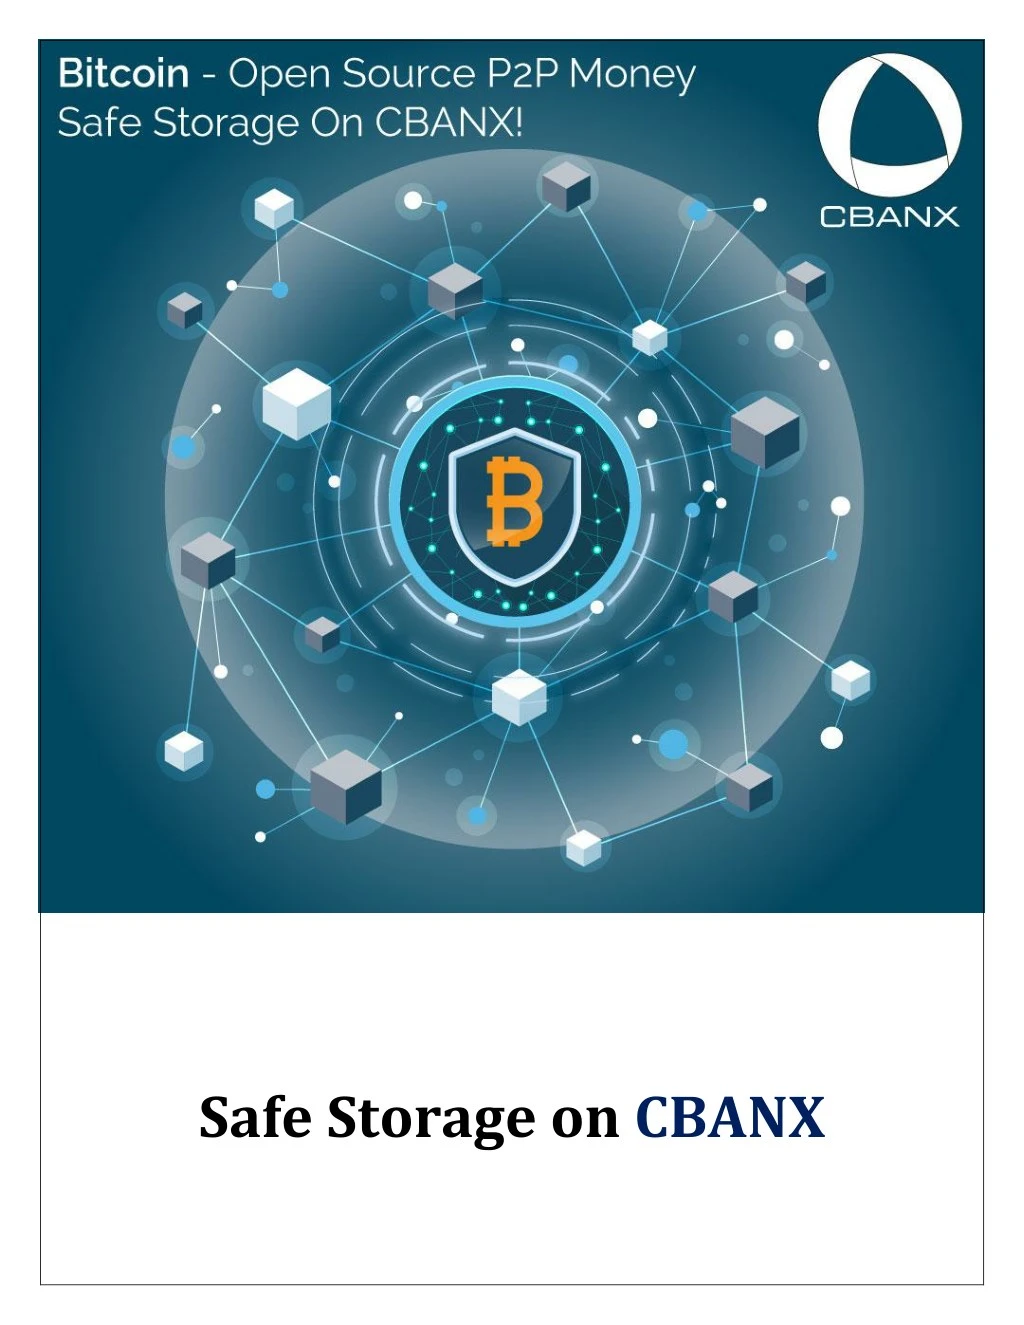 safe storage on cbanx